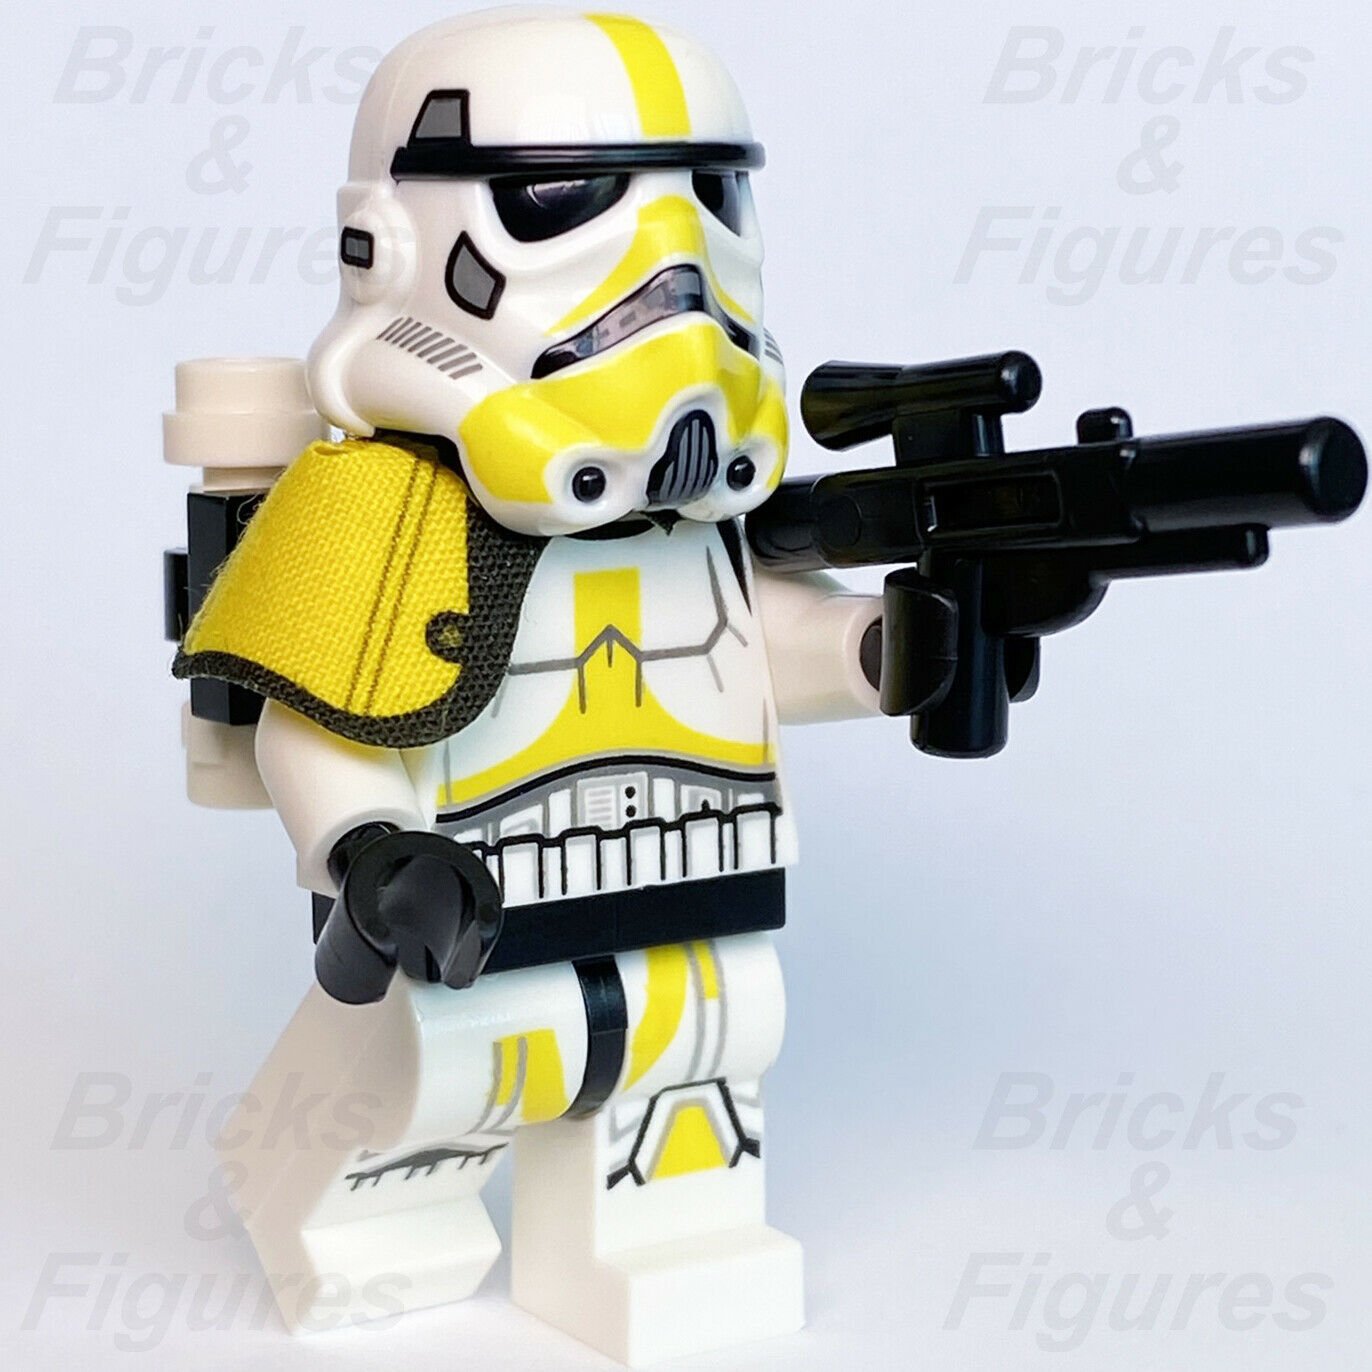 Star Wars LEGO Artillery Stormtrooper The Mandalorian Minifigure 75311 sw1157 - Bricks & Figures